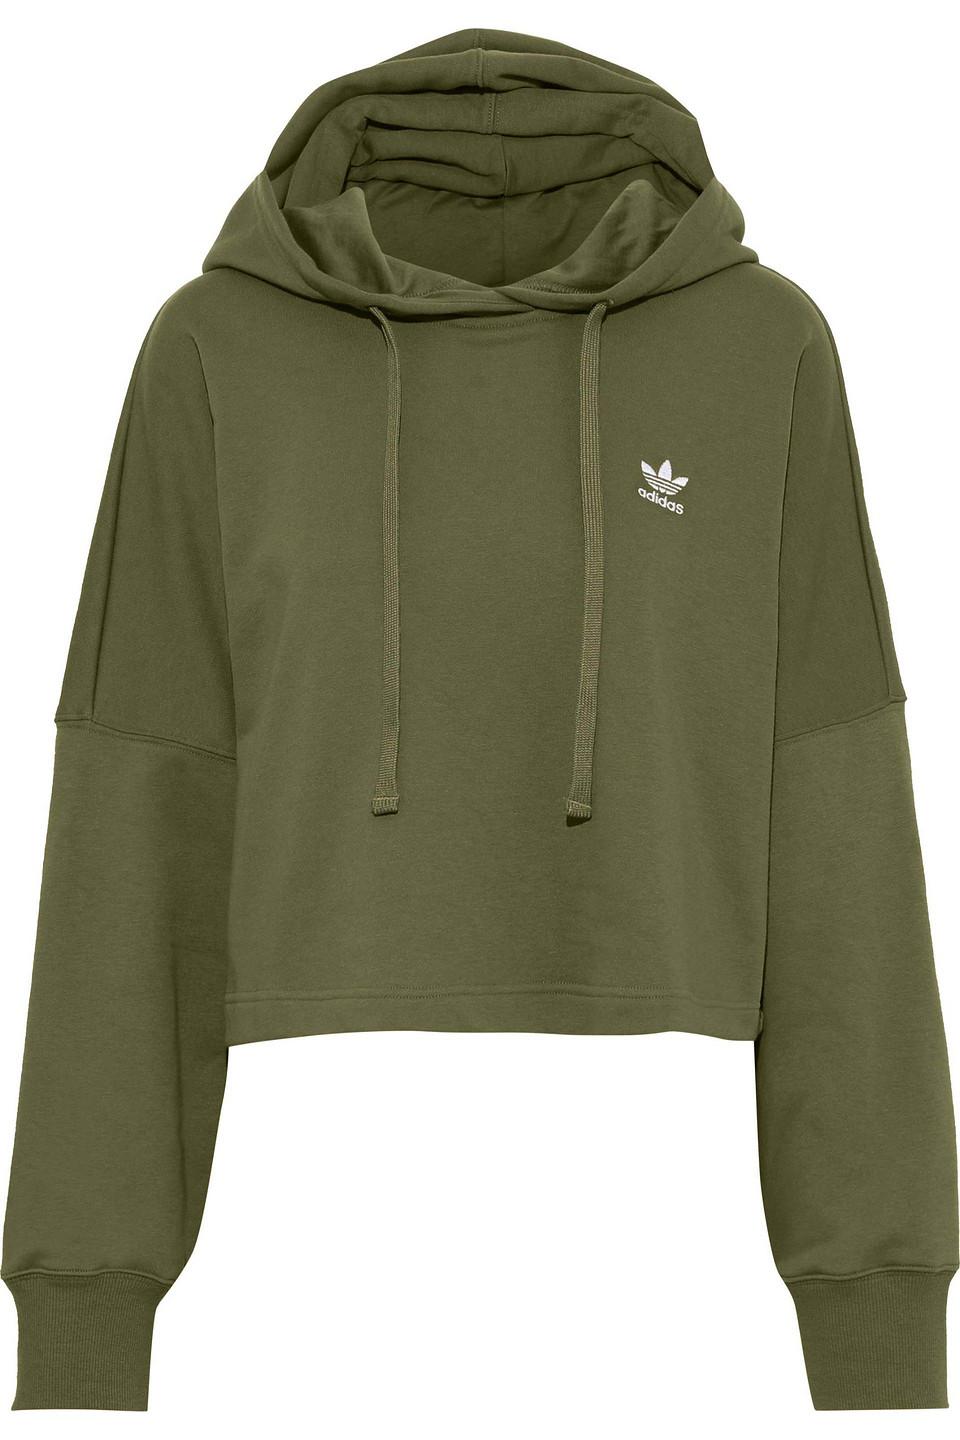 adidas hoodie army green